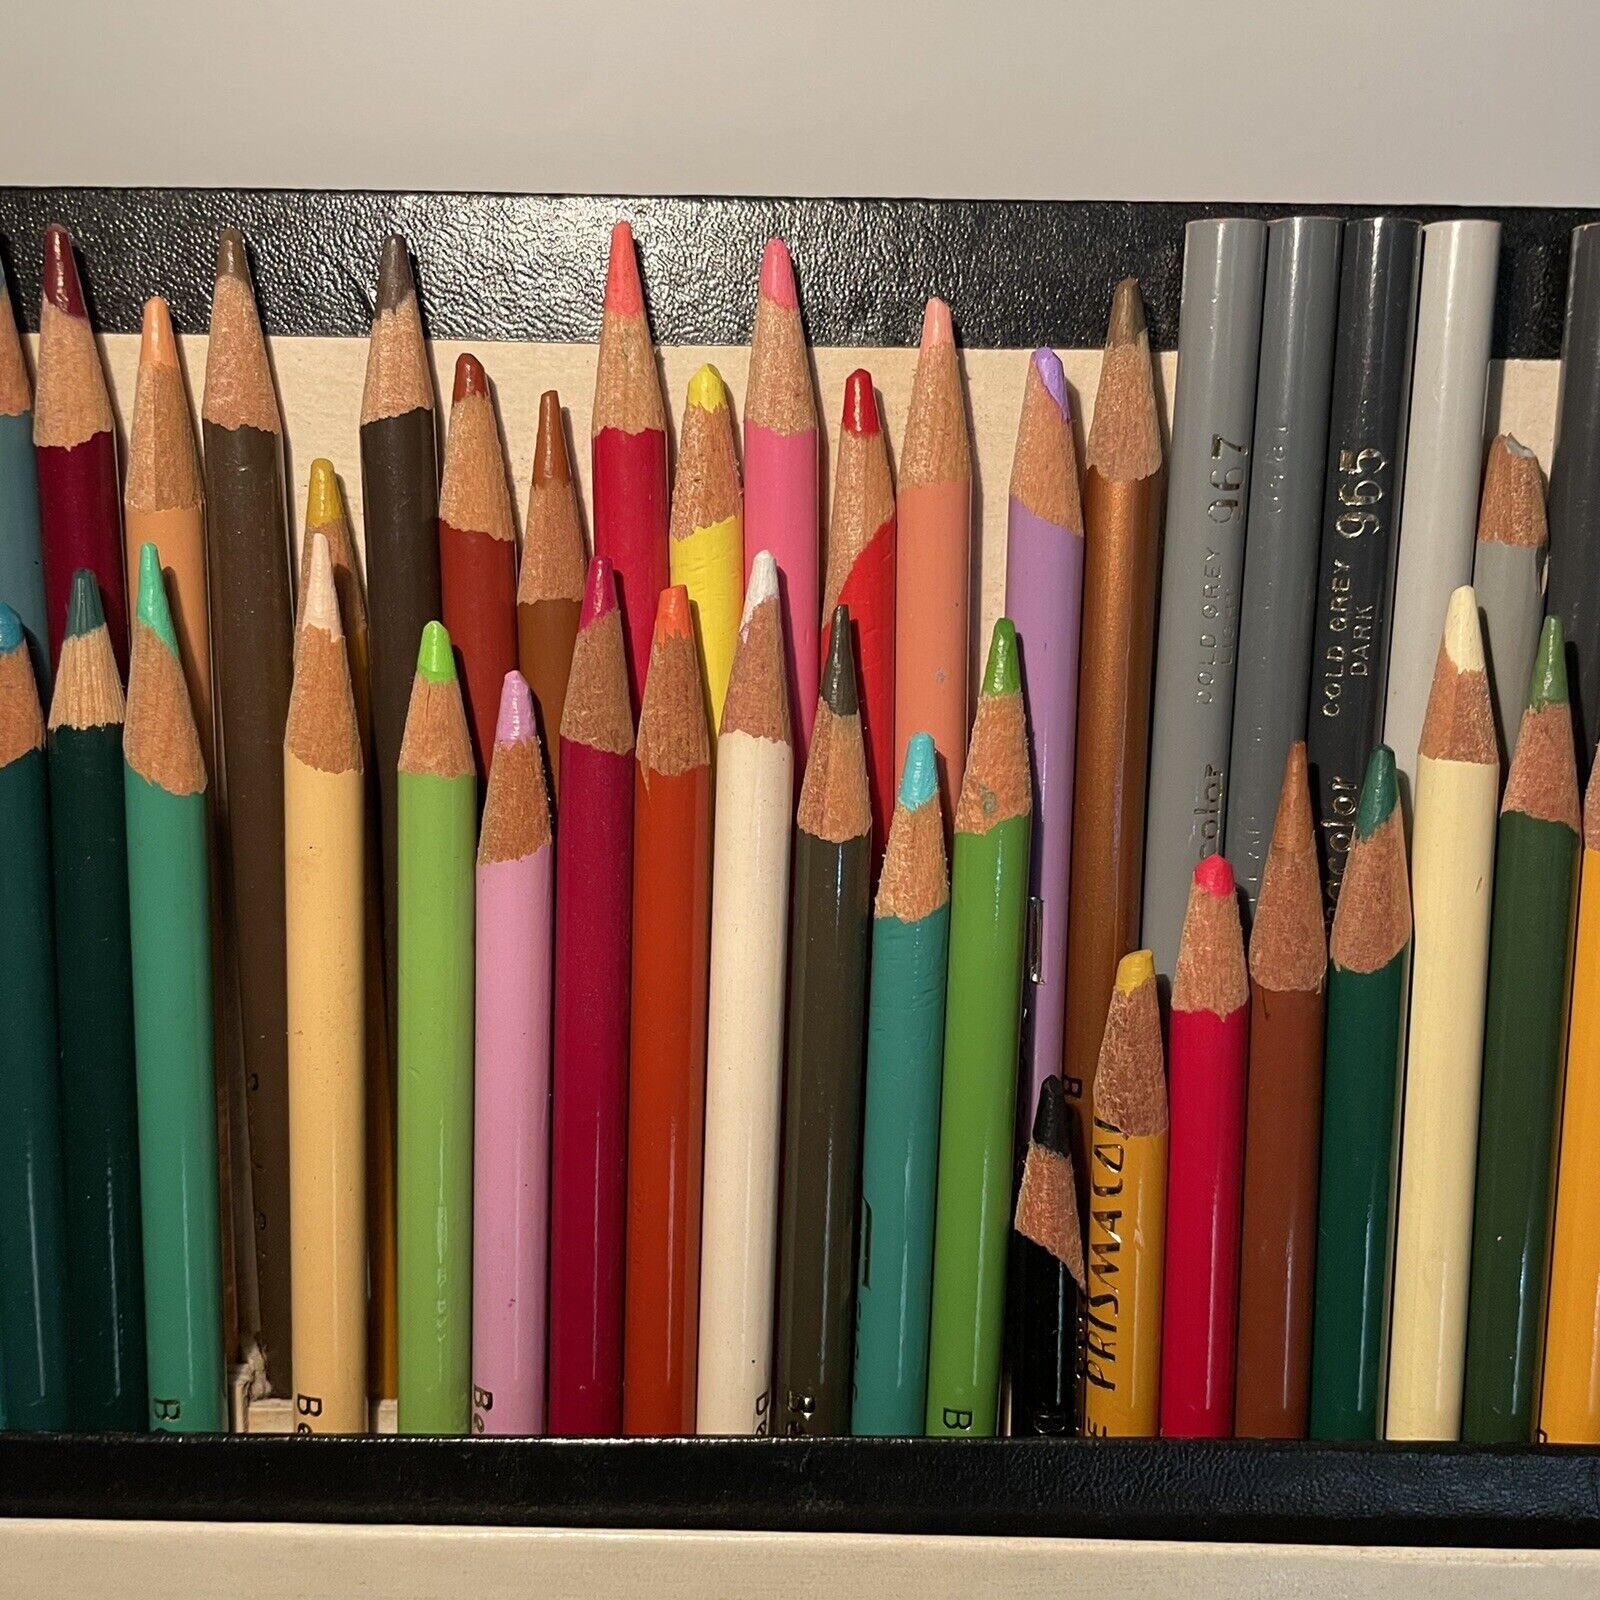 Vintage Berol Prismacolor No. 960 Color Art Set 59 Pencils (All Good, Many  Used)